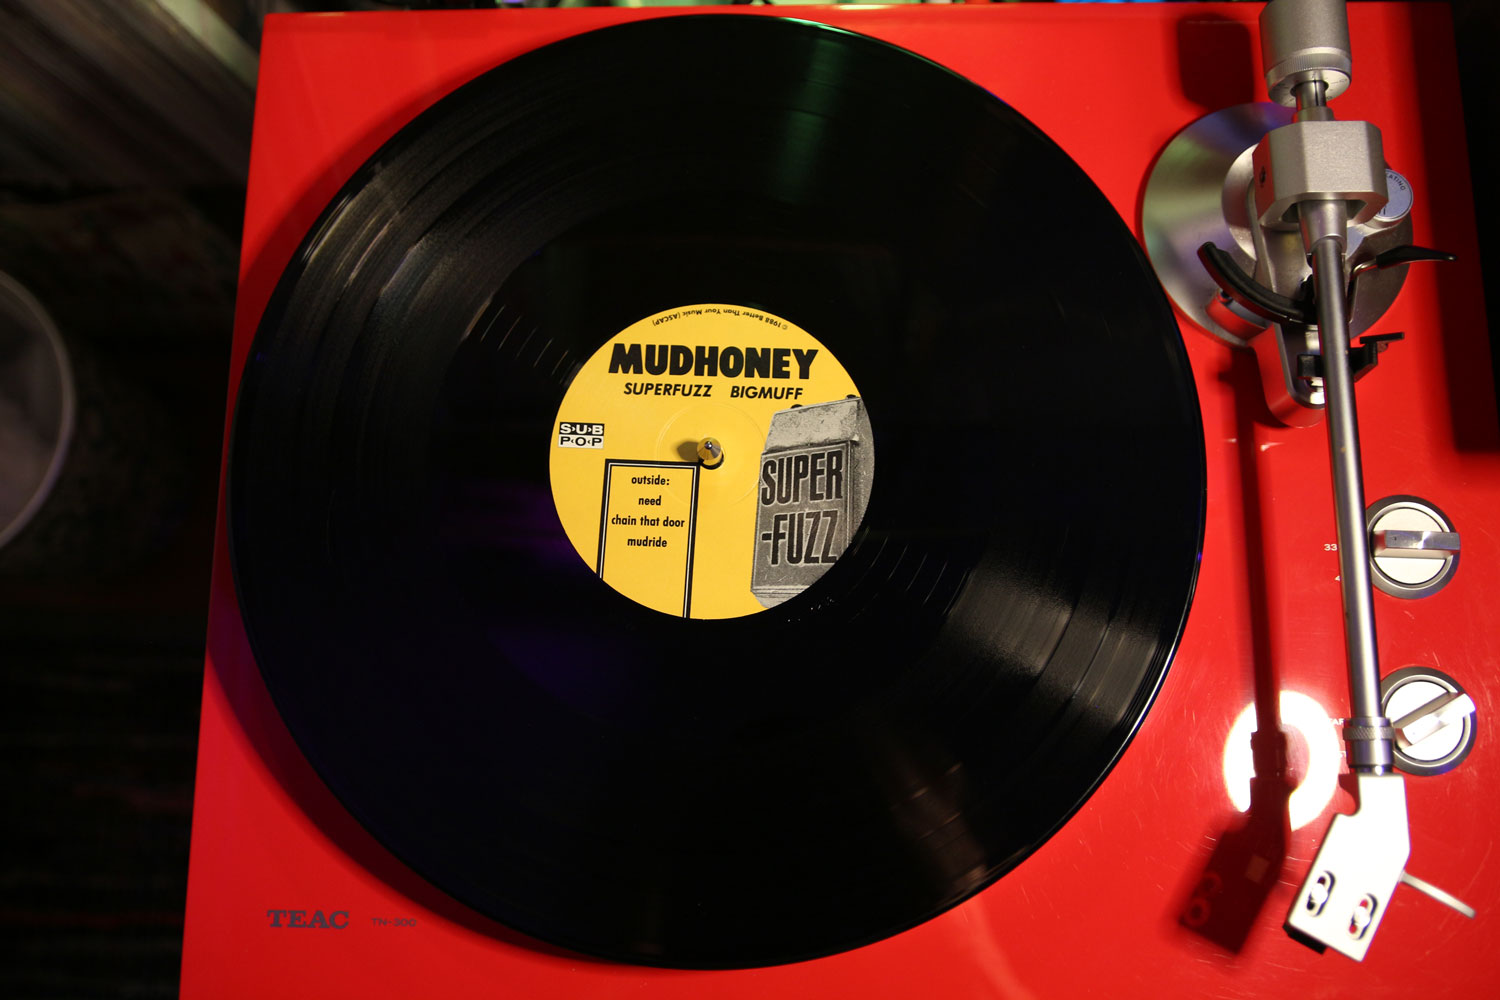 Mudhoney  - Superfuzz Bigmuff 2013 LP